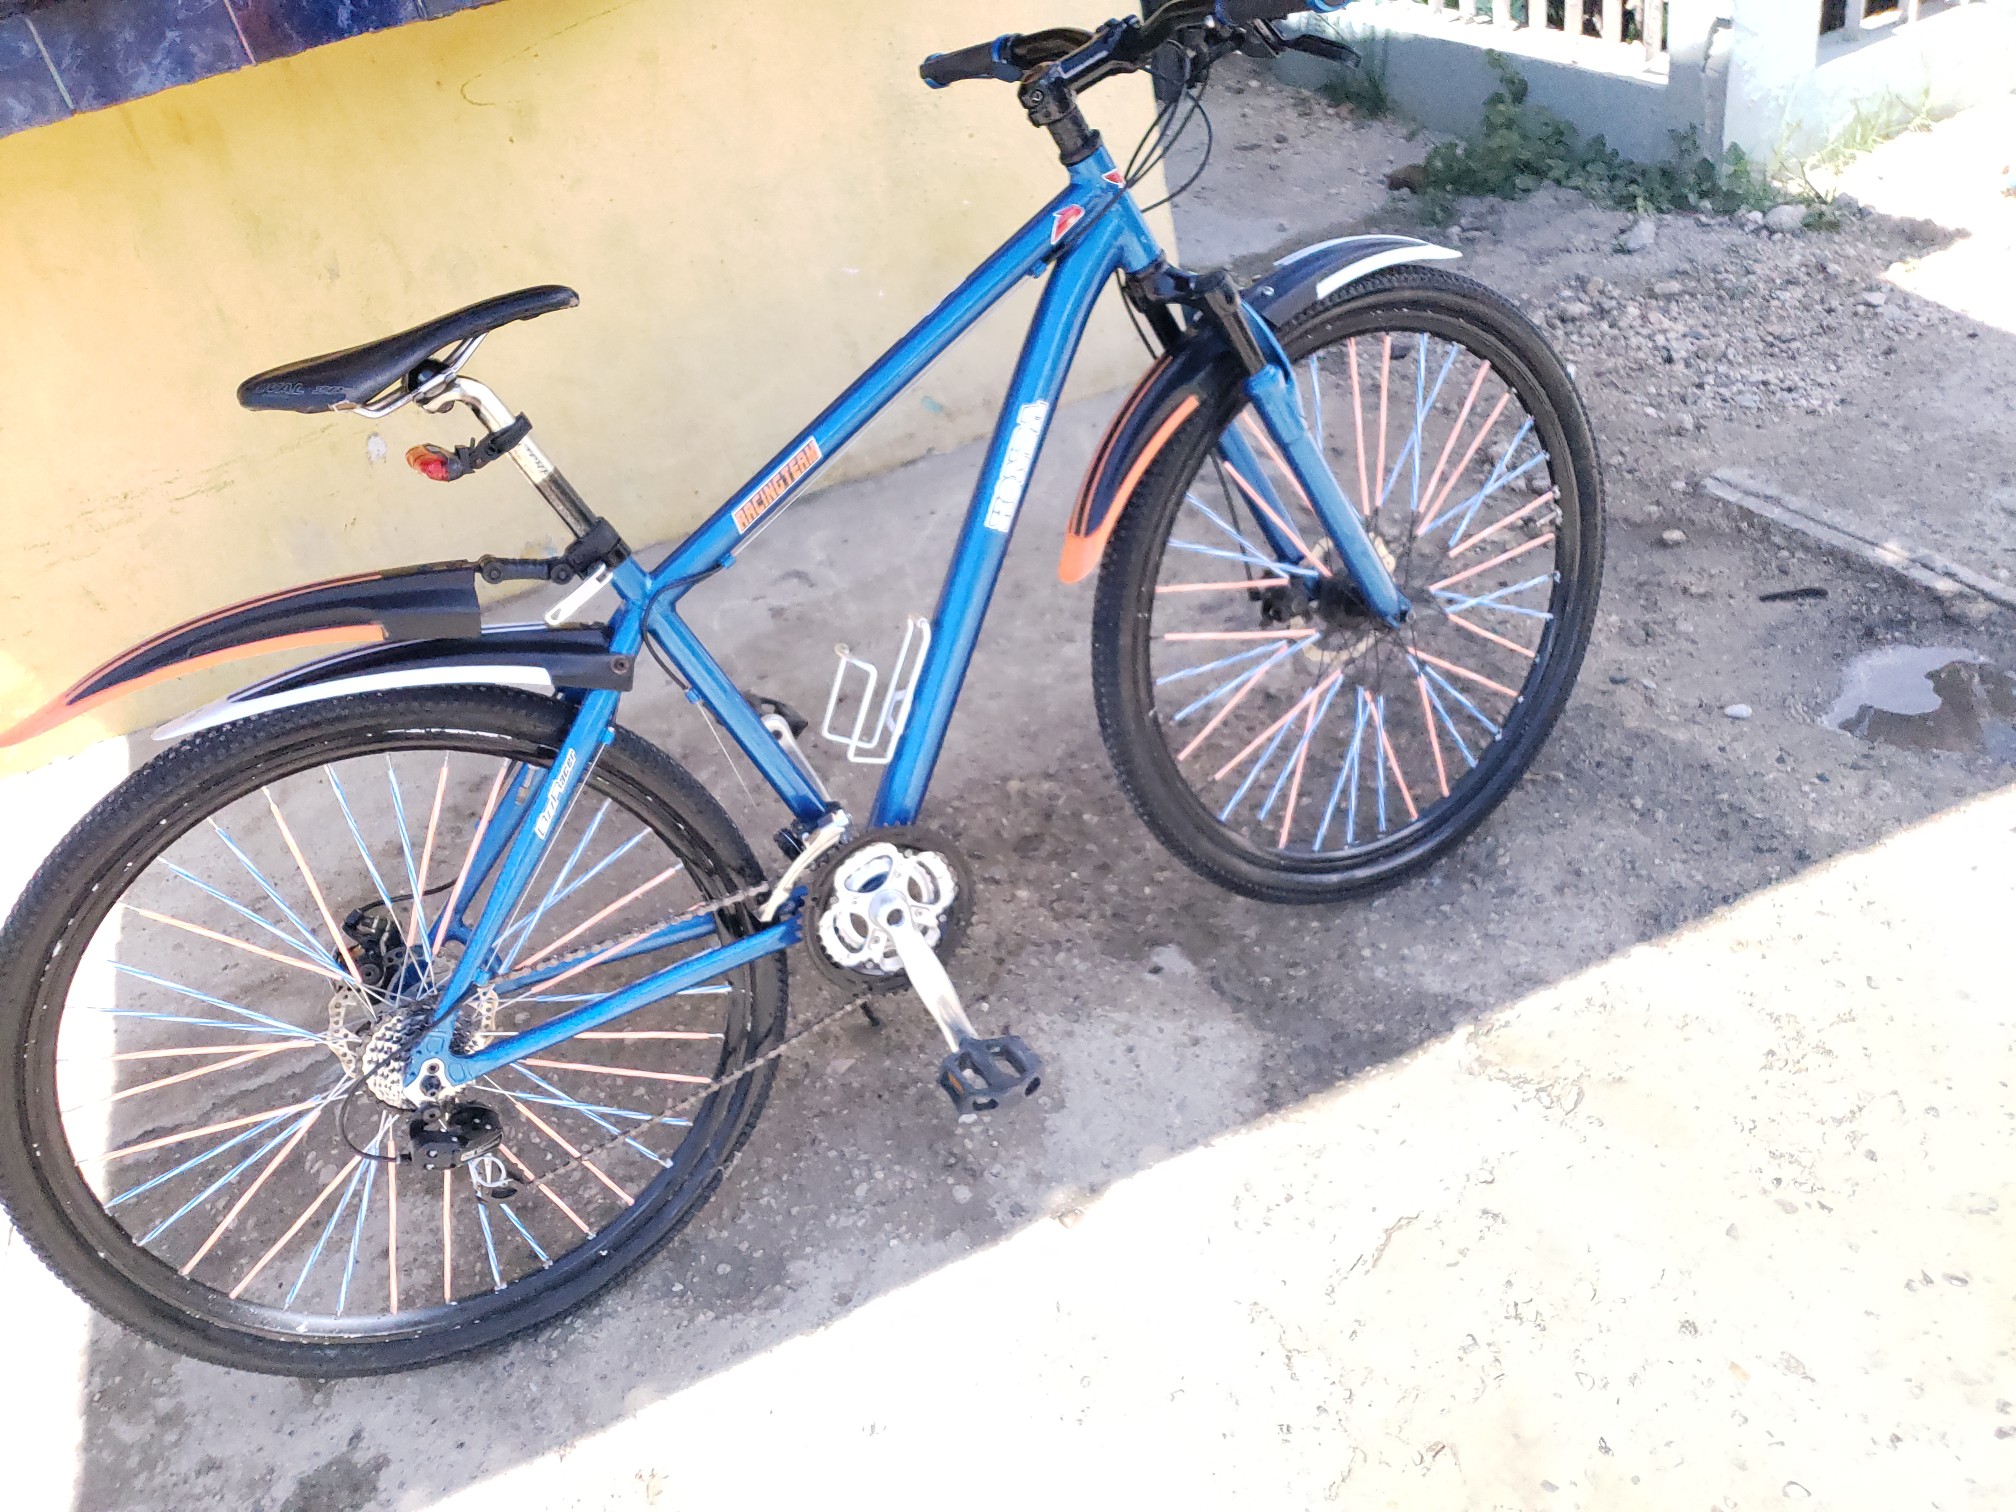 bicicletas y accesorios - Se vende bicicleta profesional mongoose en buen estado